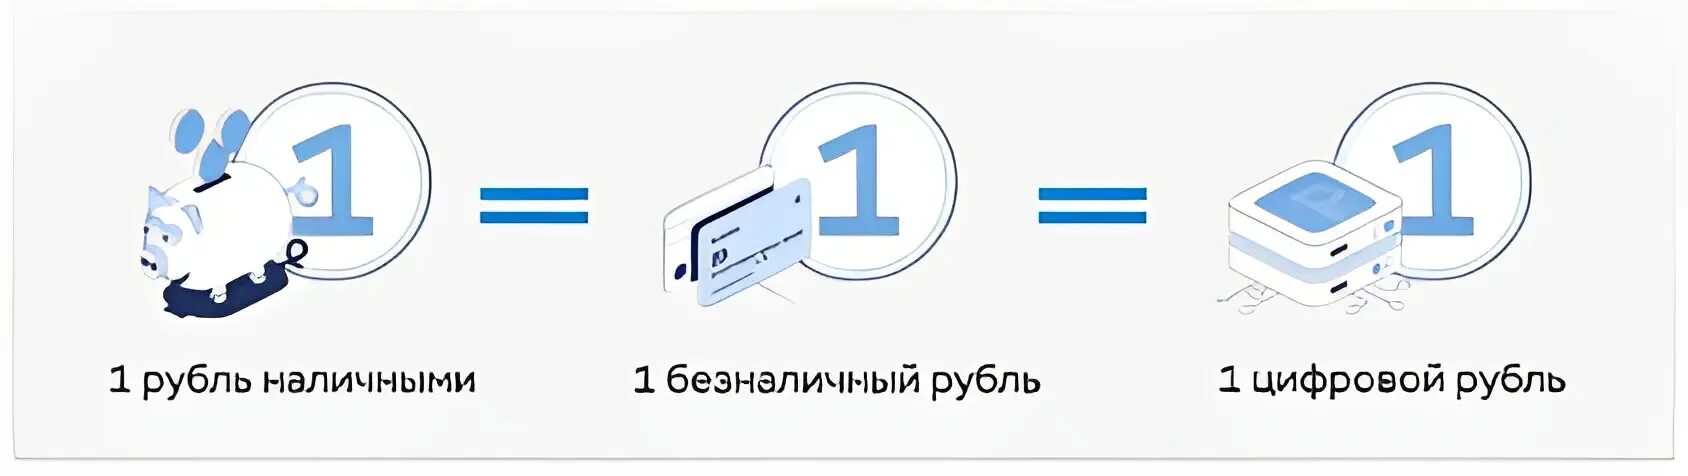 Внедрение цифрового рубля. Цифровой рубль. Логотип цифрового рубля. Банк цифровой рубль.